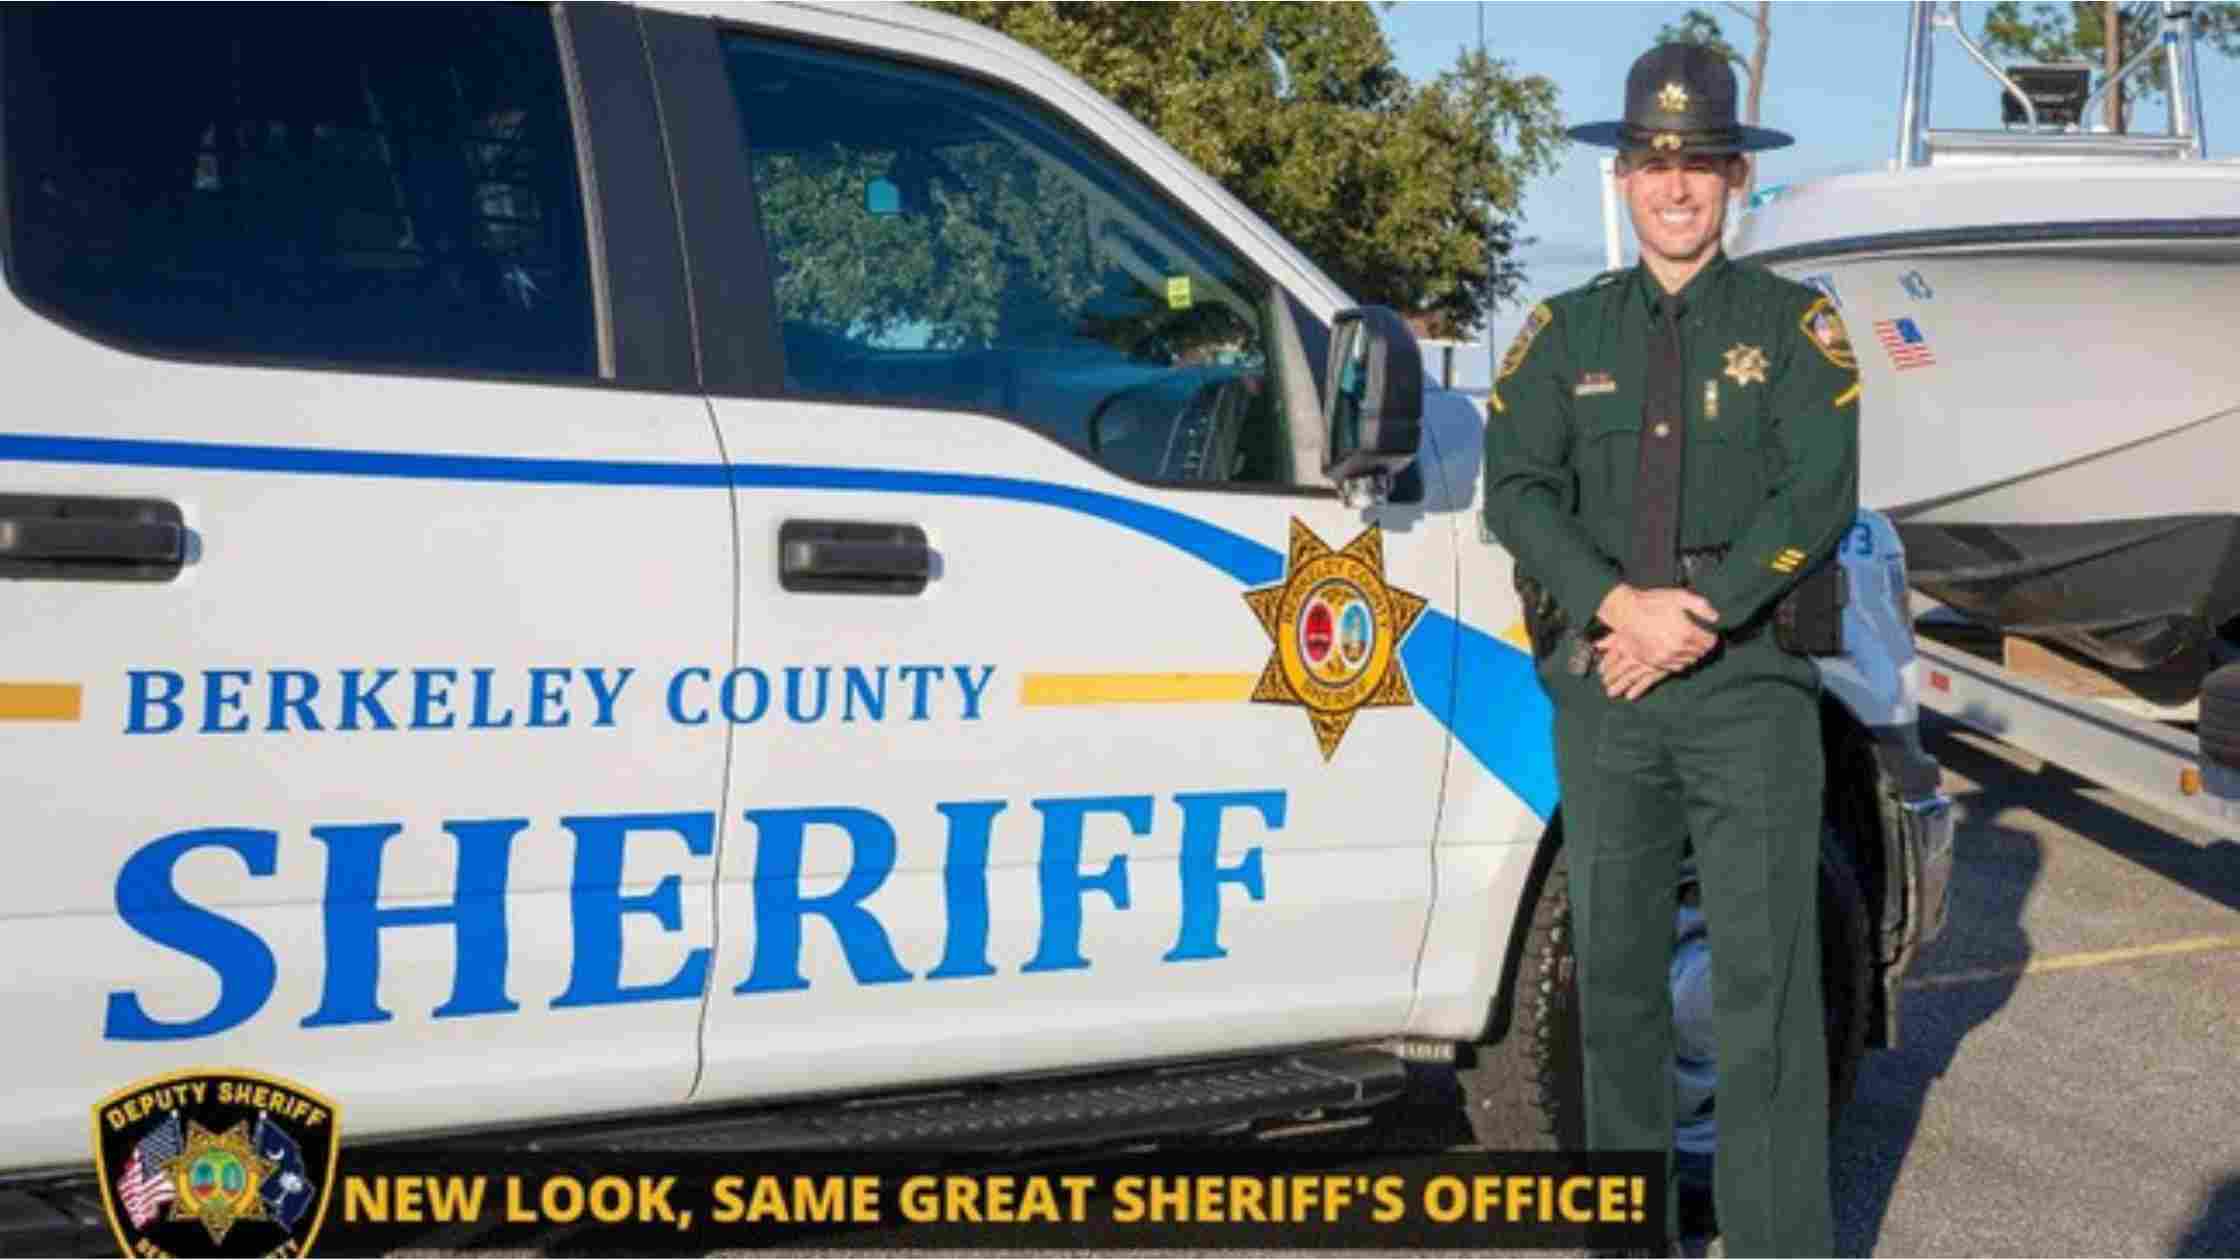 Berkeley County Sheriff's Office